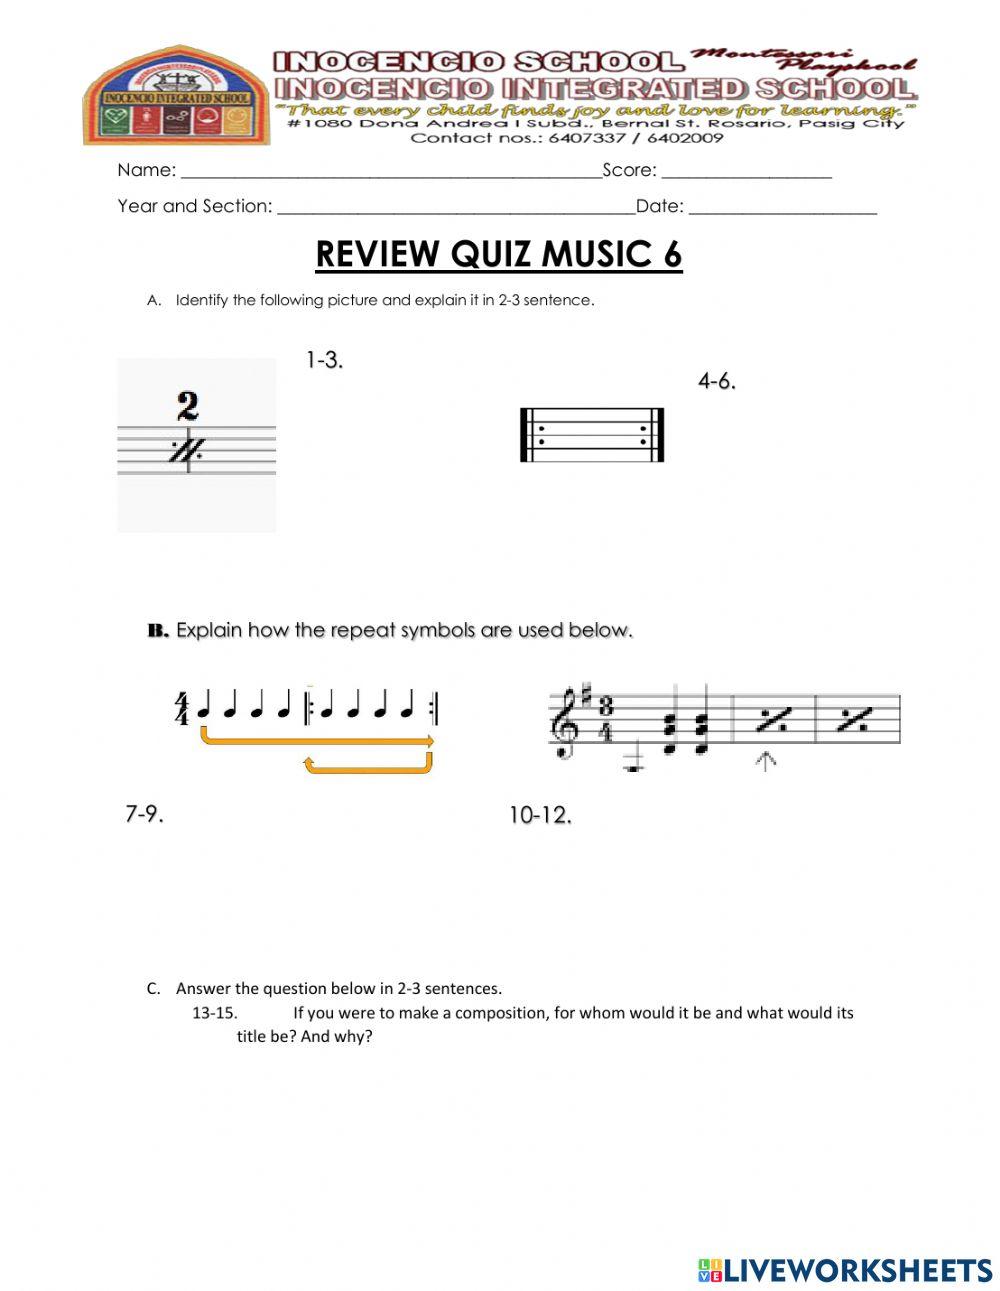 Q3-review quiz music 6